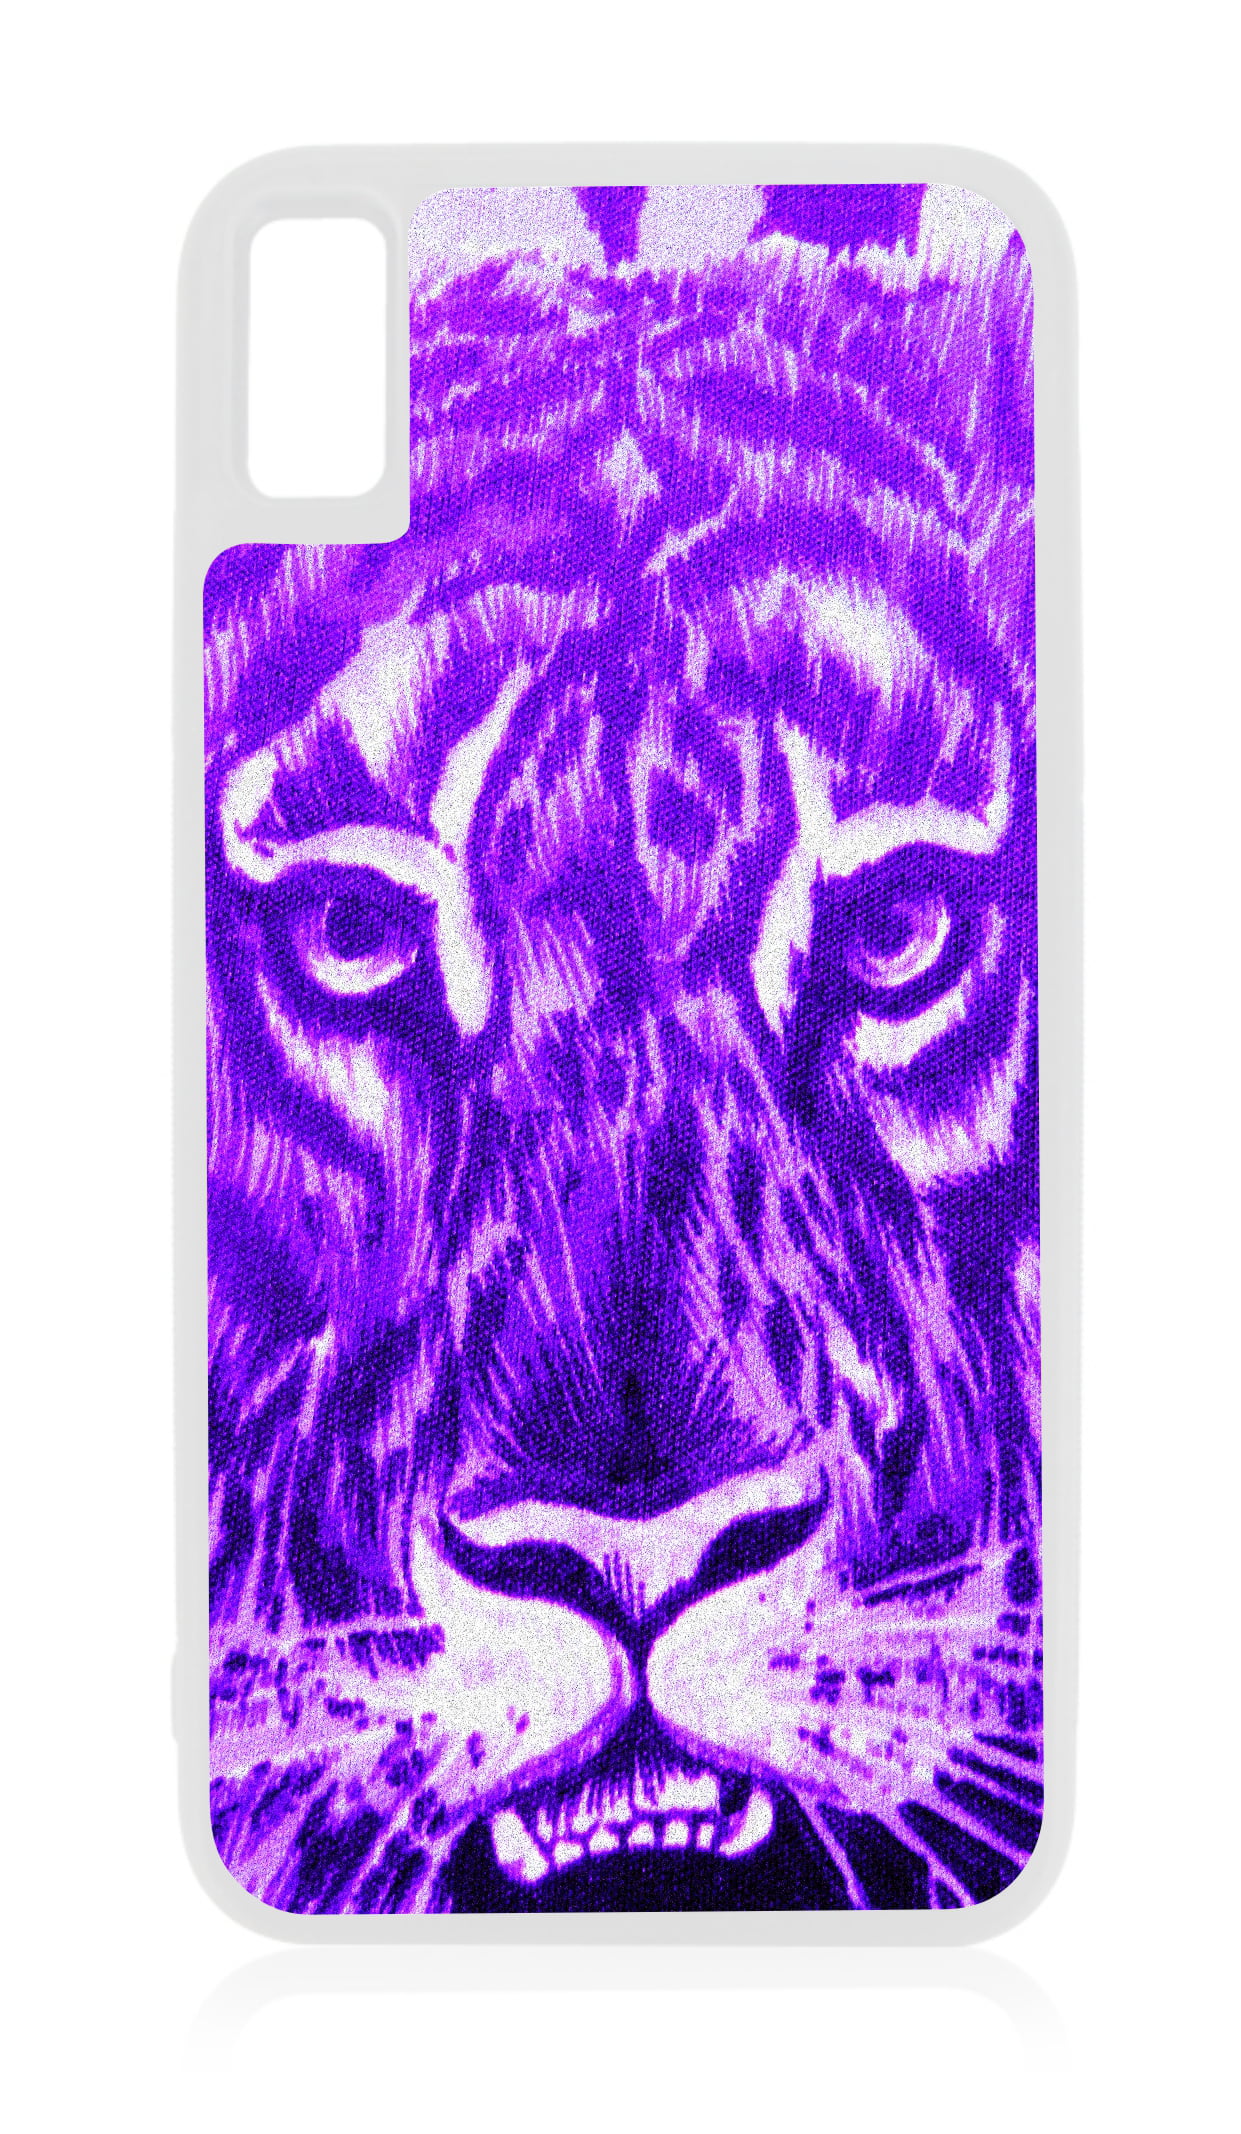 tiger case iphone x